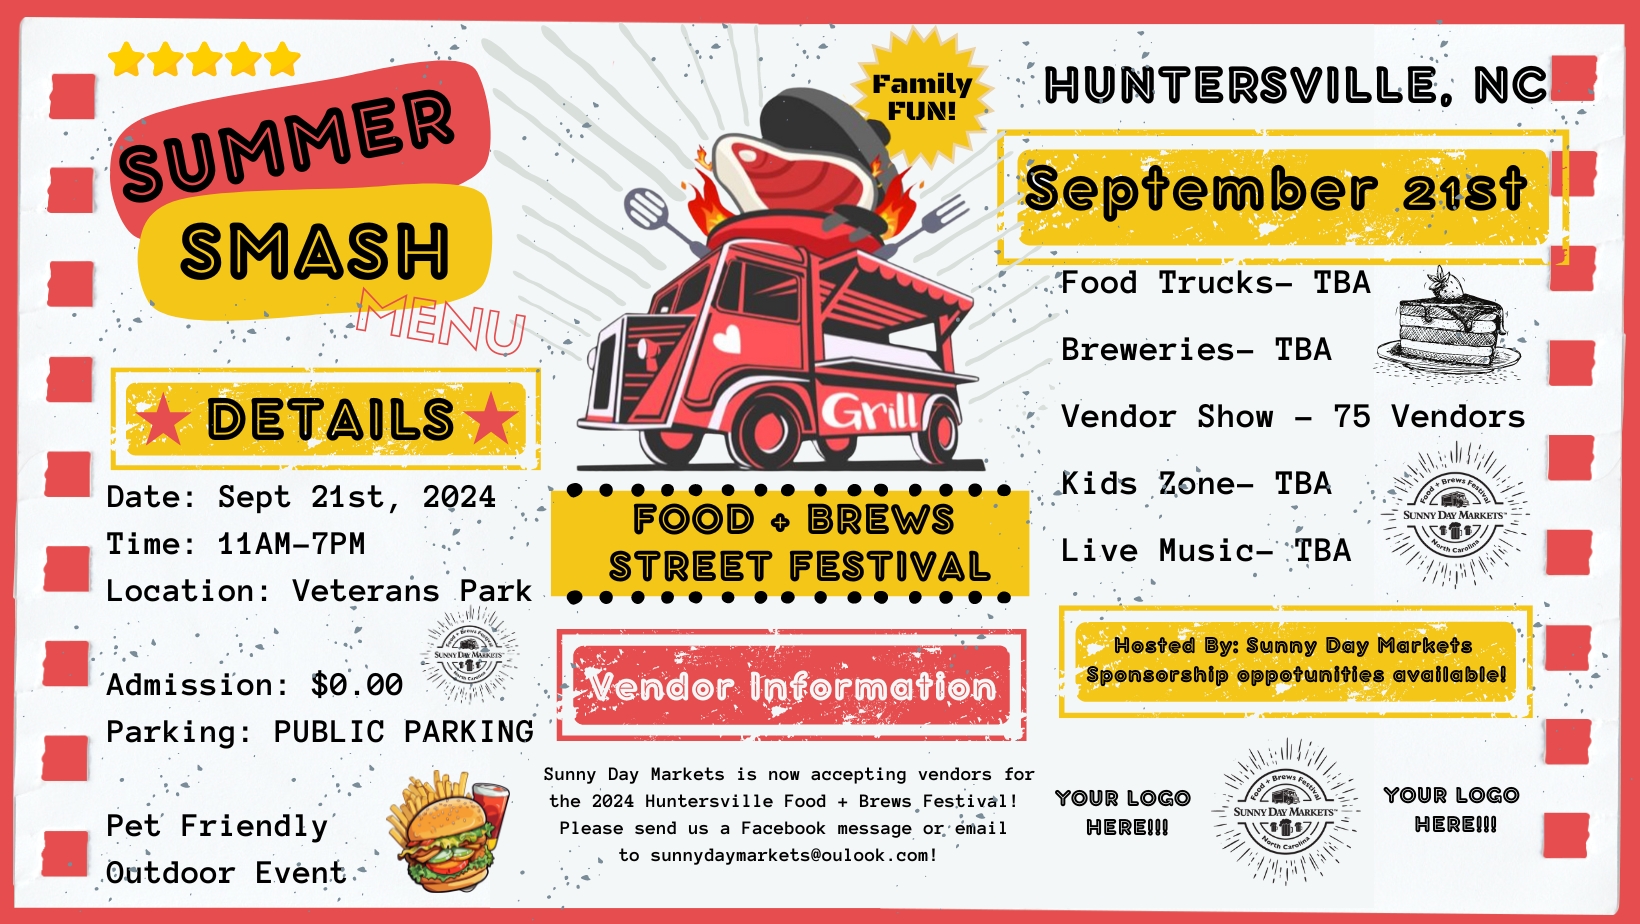 Huntersville Food + Brews Festival cover image